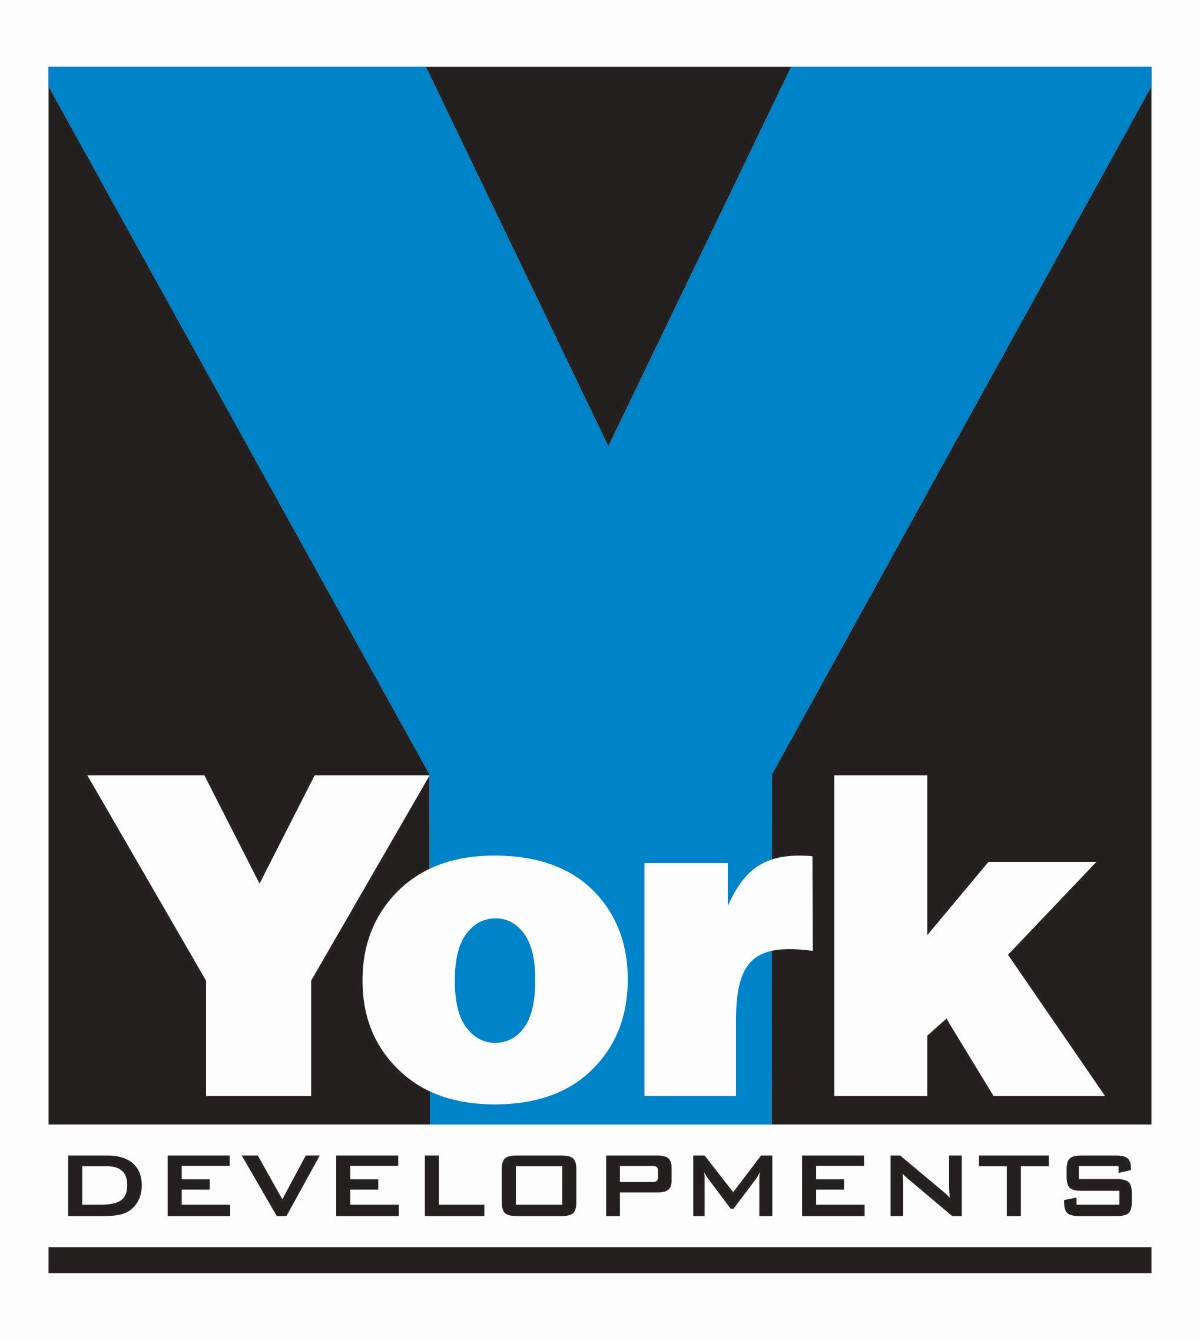 York Developments